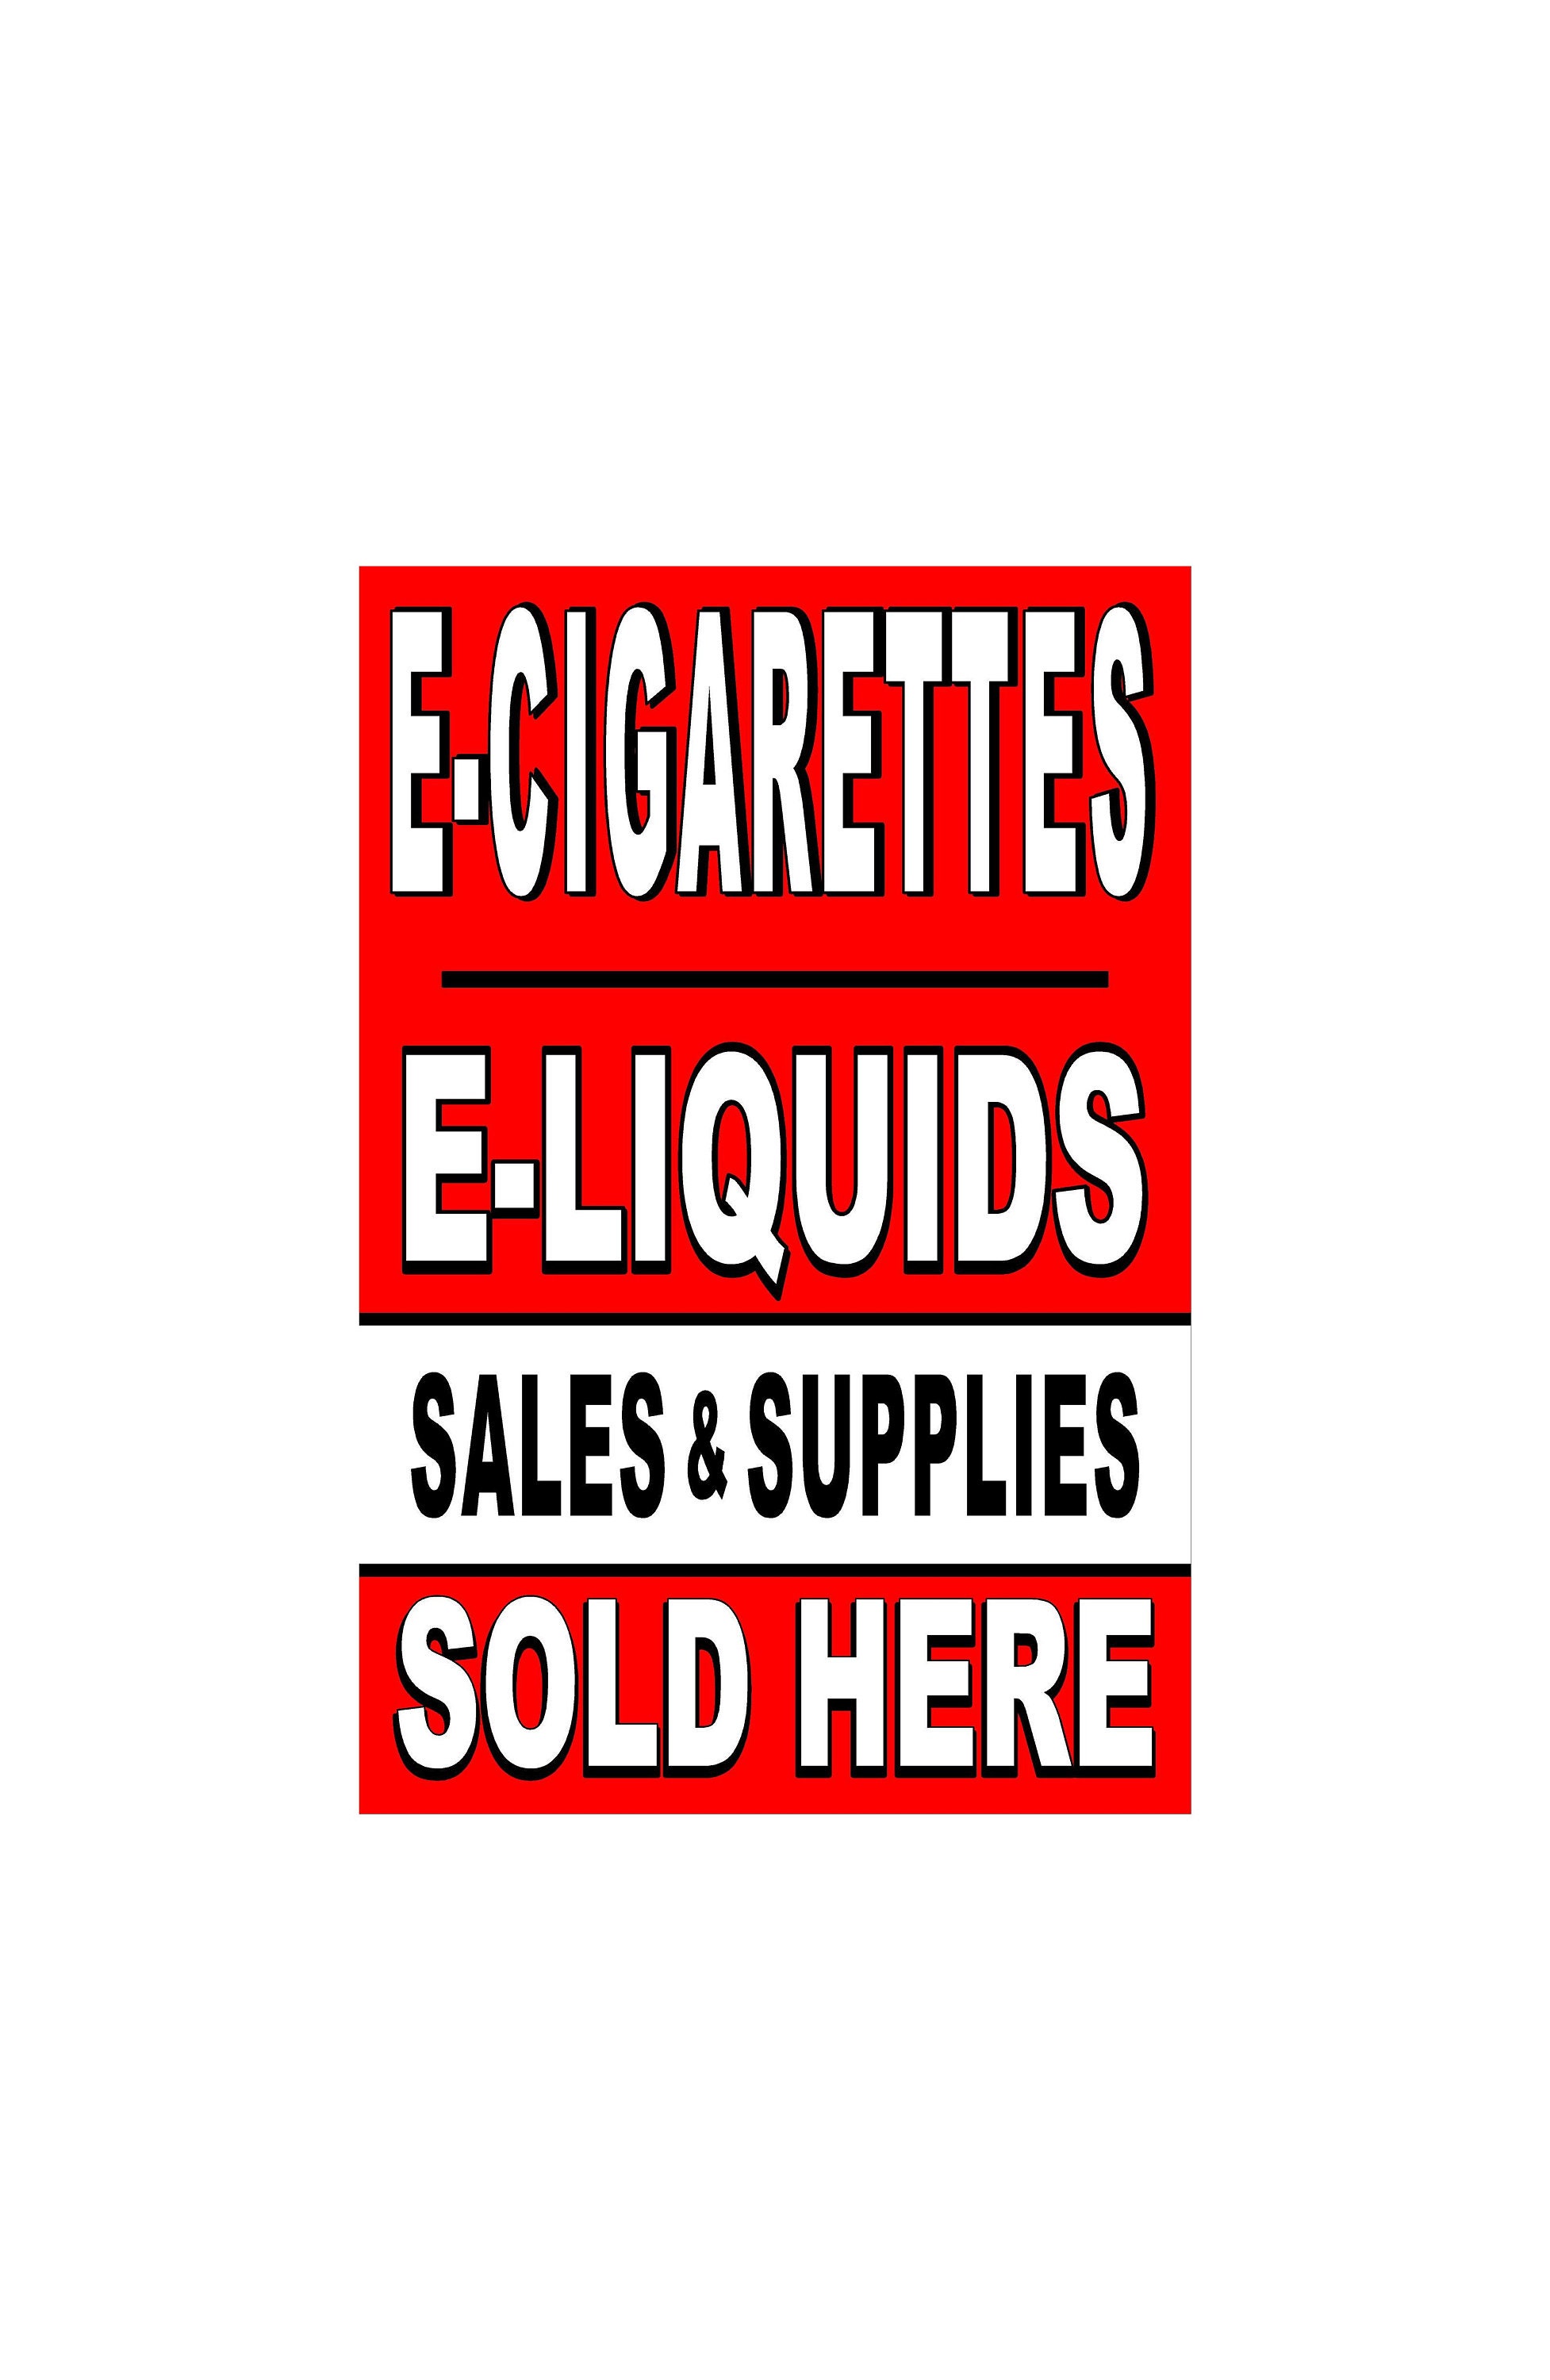 E Cigarettes E Liquids Sold Here Advertising Poster Sign Etsy UK